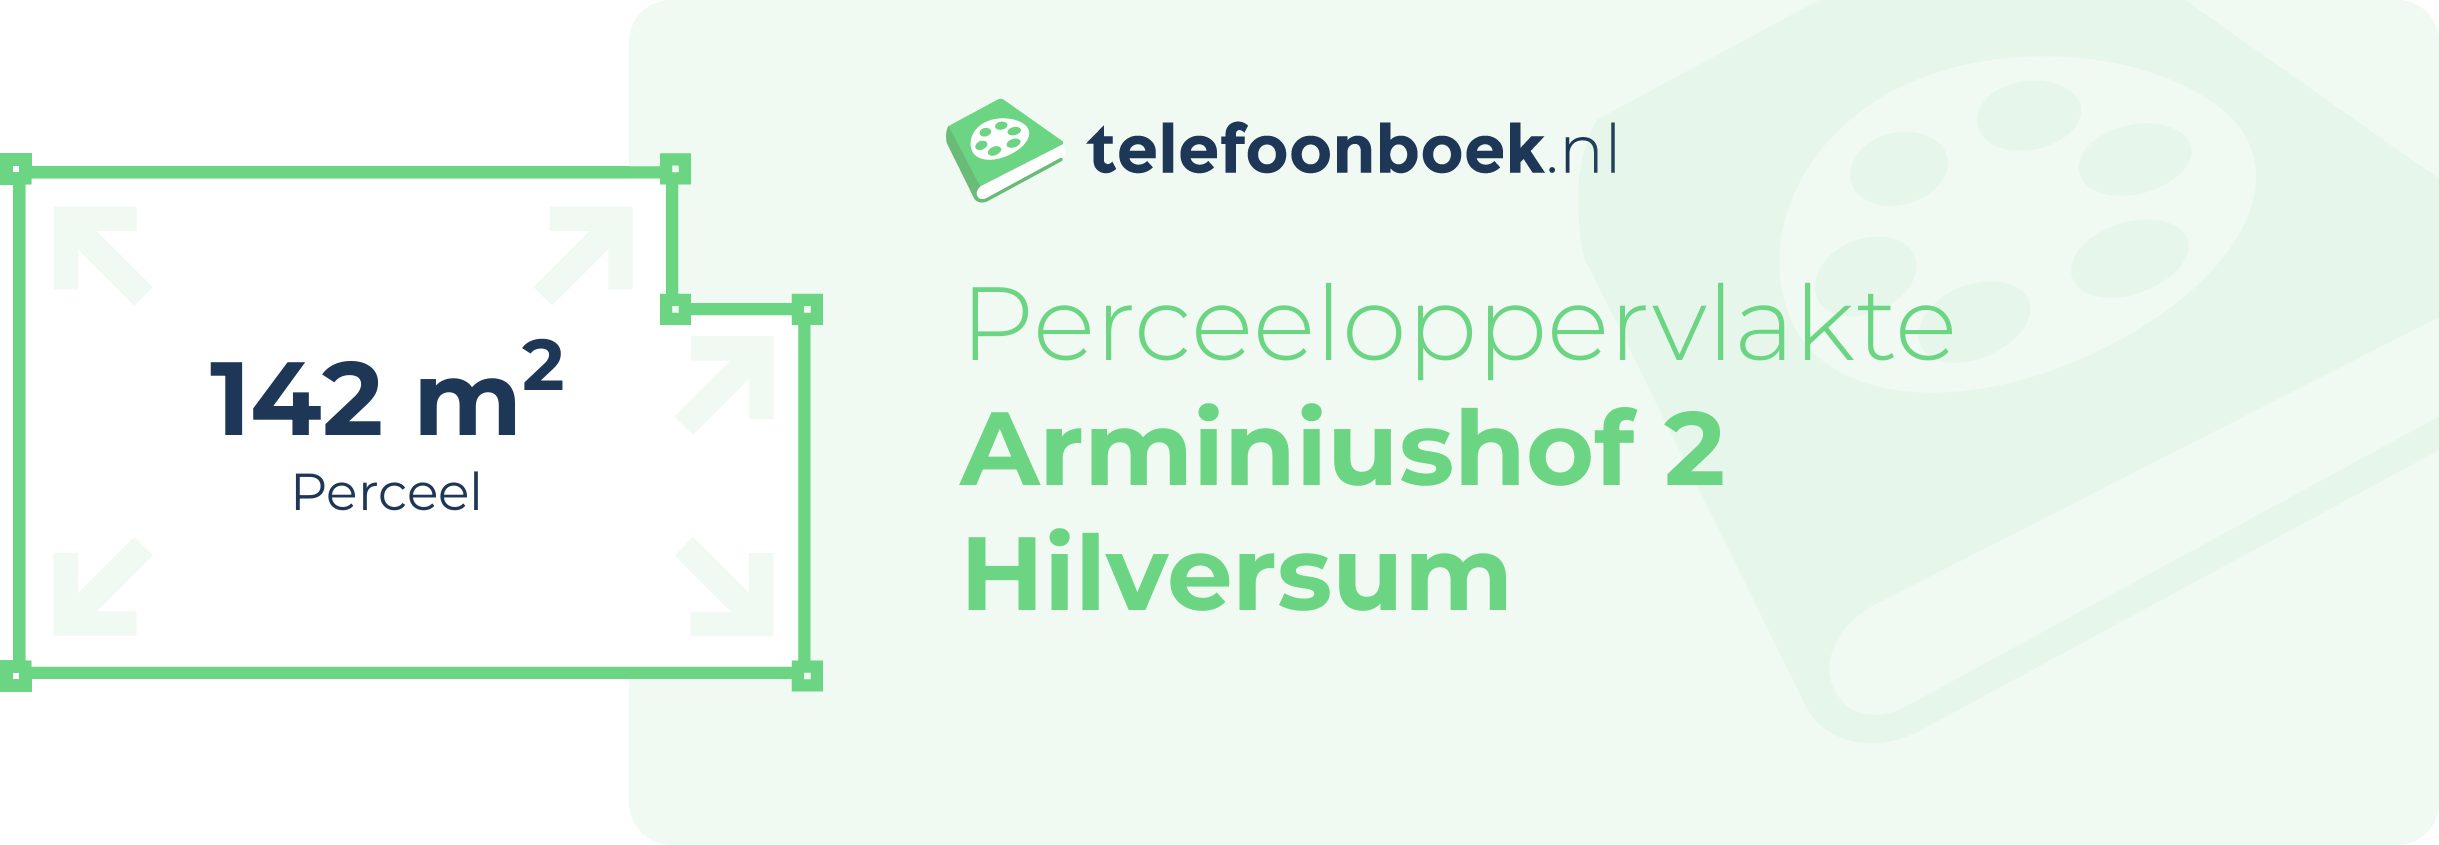 Perceeloppervlakte Arminiushof 2 Hilversum